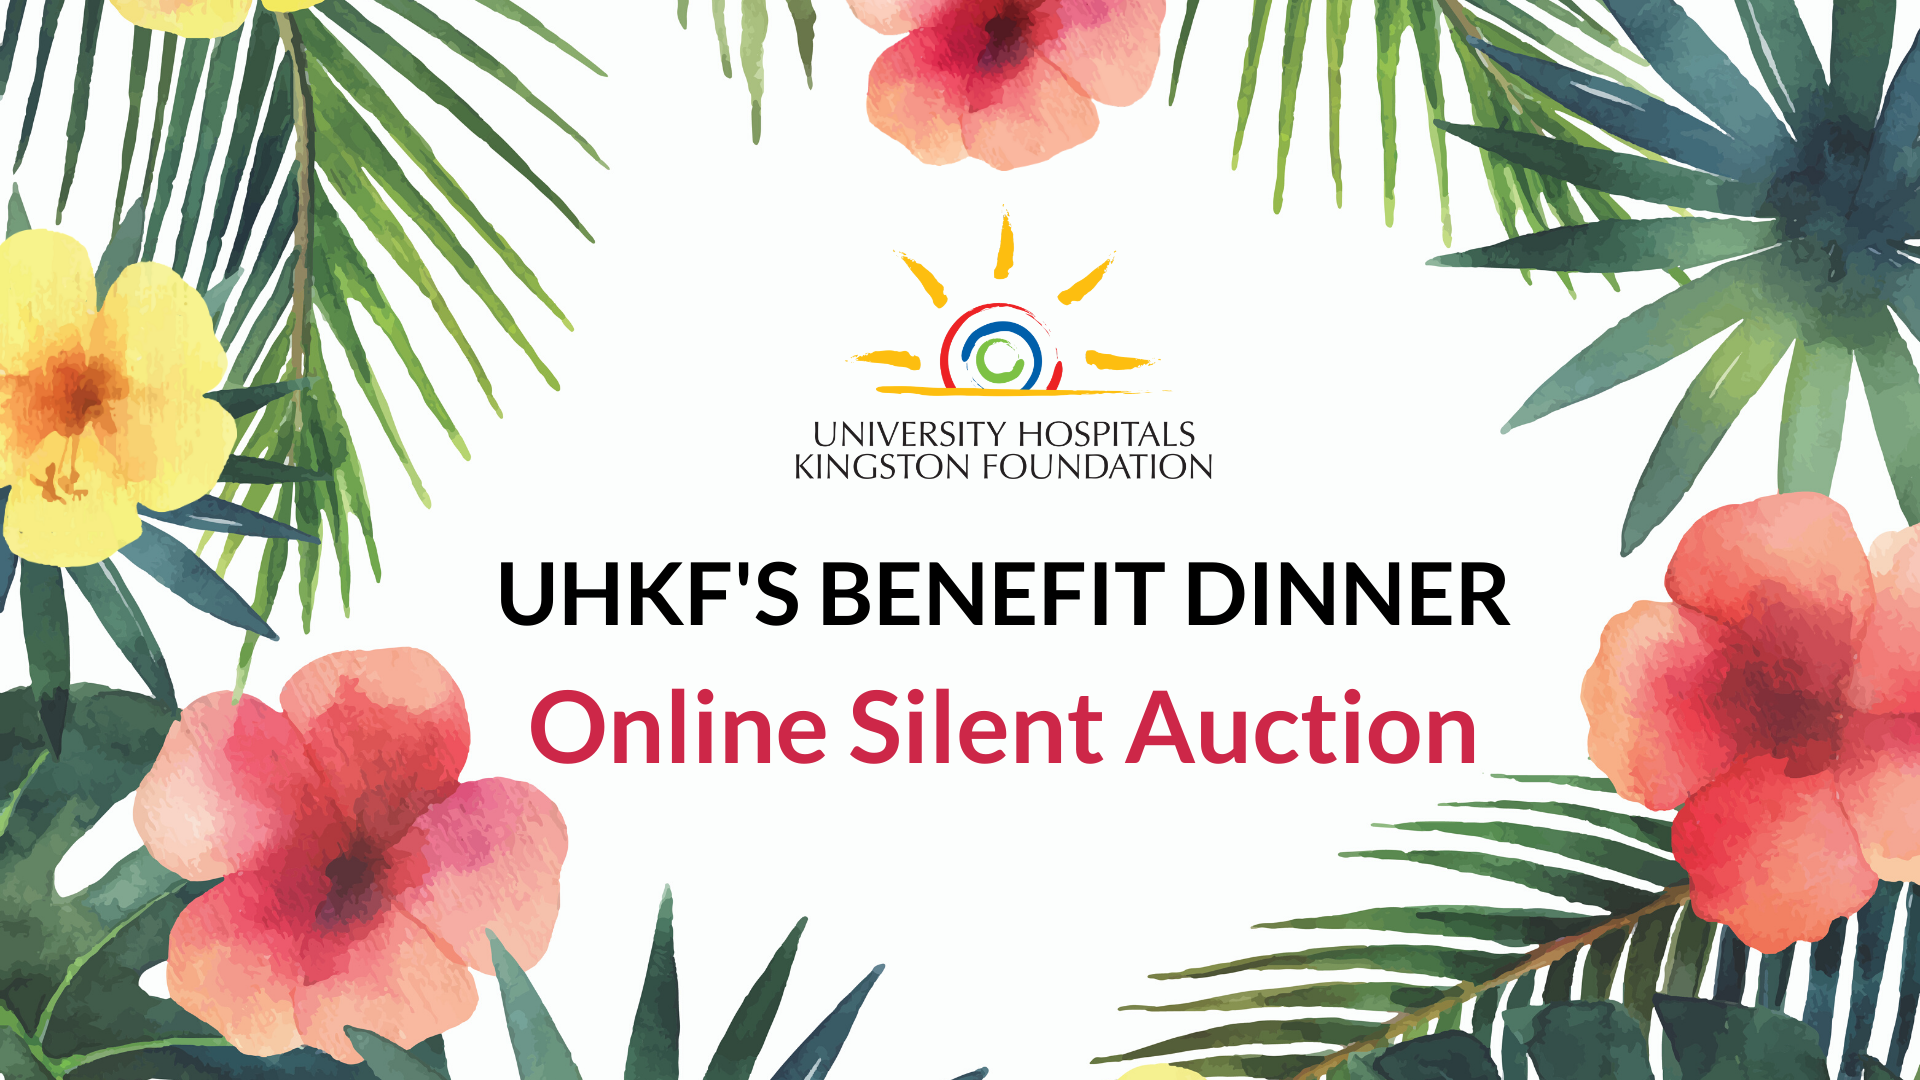 UHKF's Benefit Dinner Online Silent Auction Image